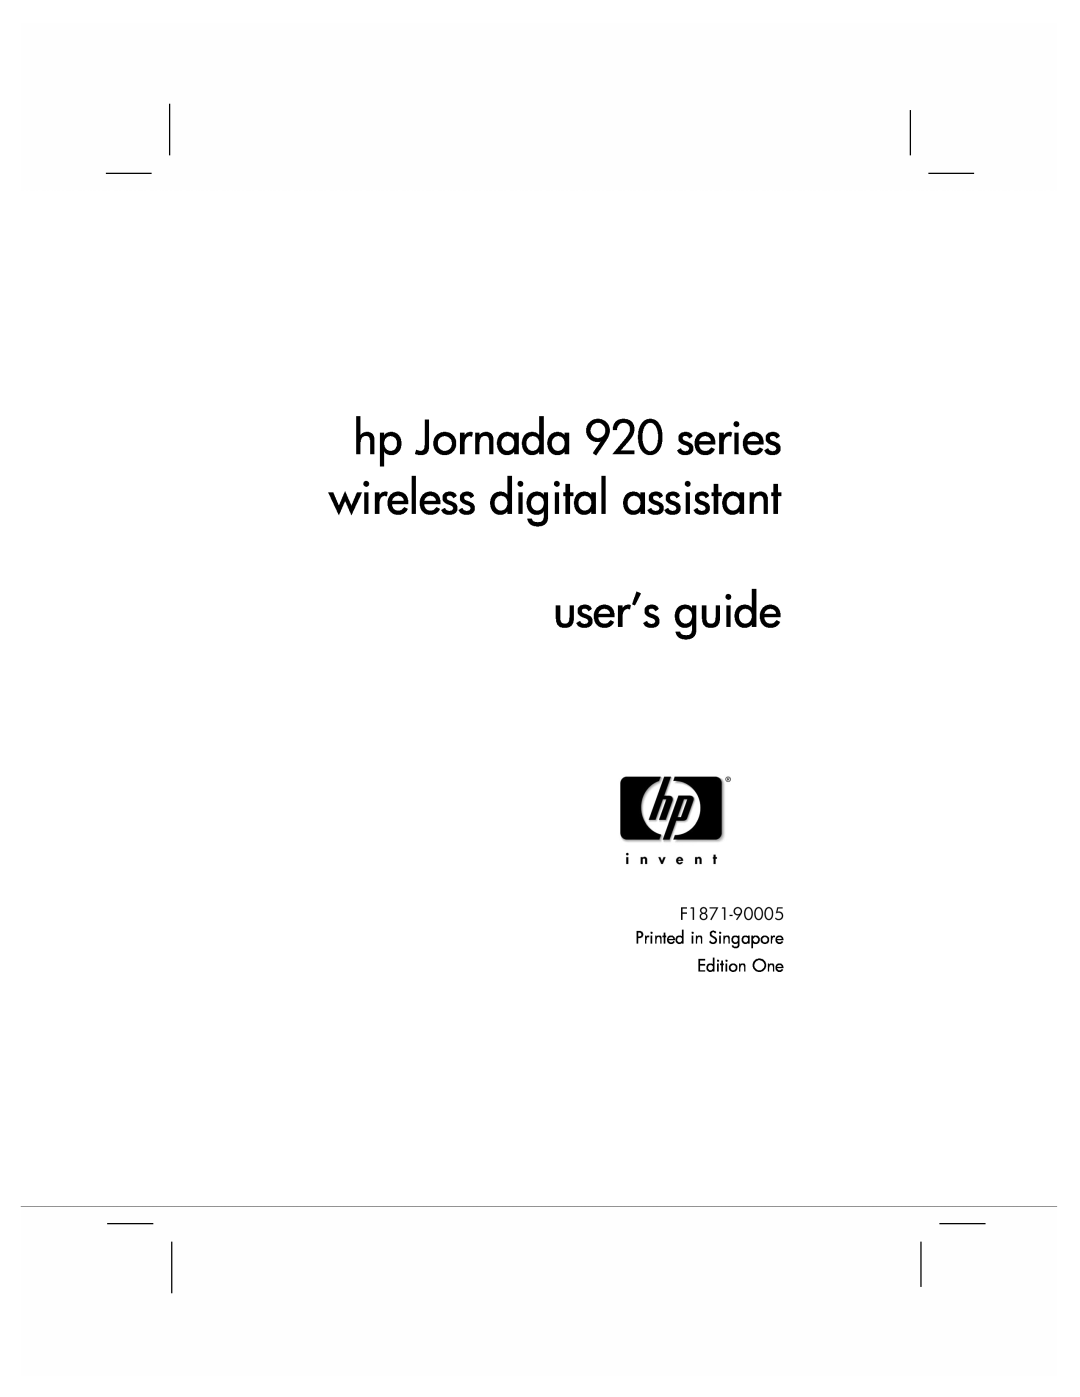 HP manual user’s guide, hp Jornada 920 series wireless digital assistant 